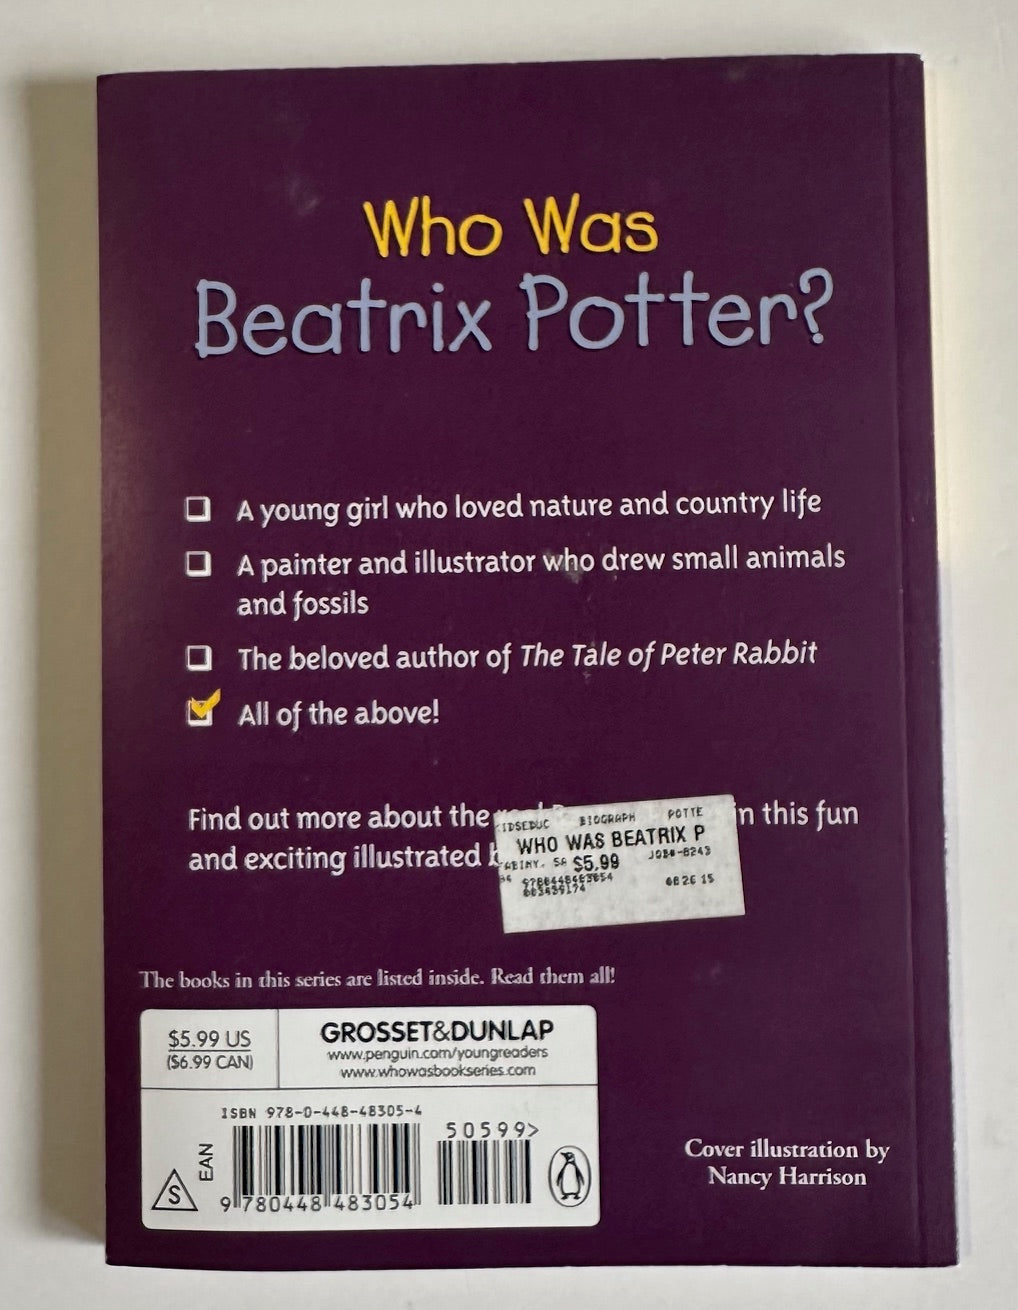 "Who Was Beatrix Potter?"